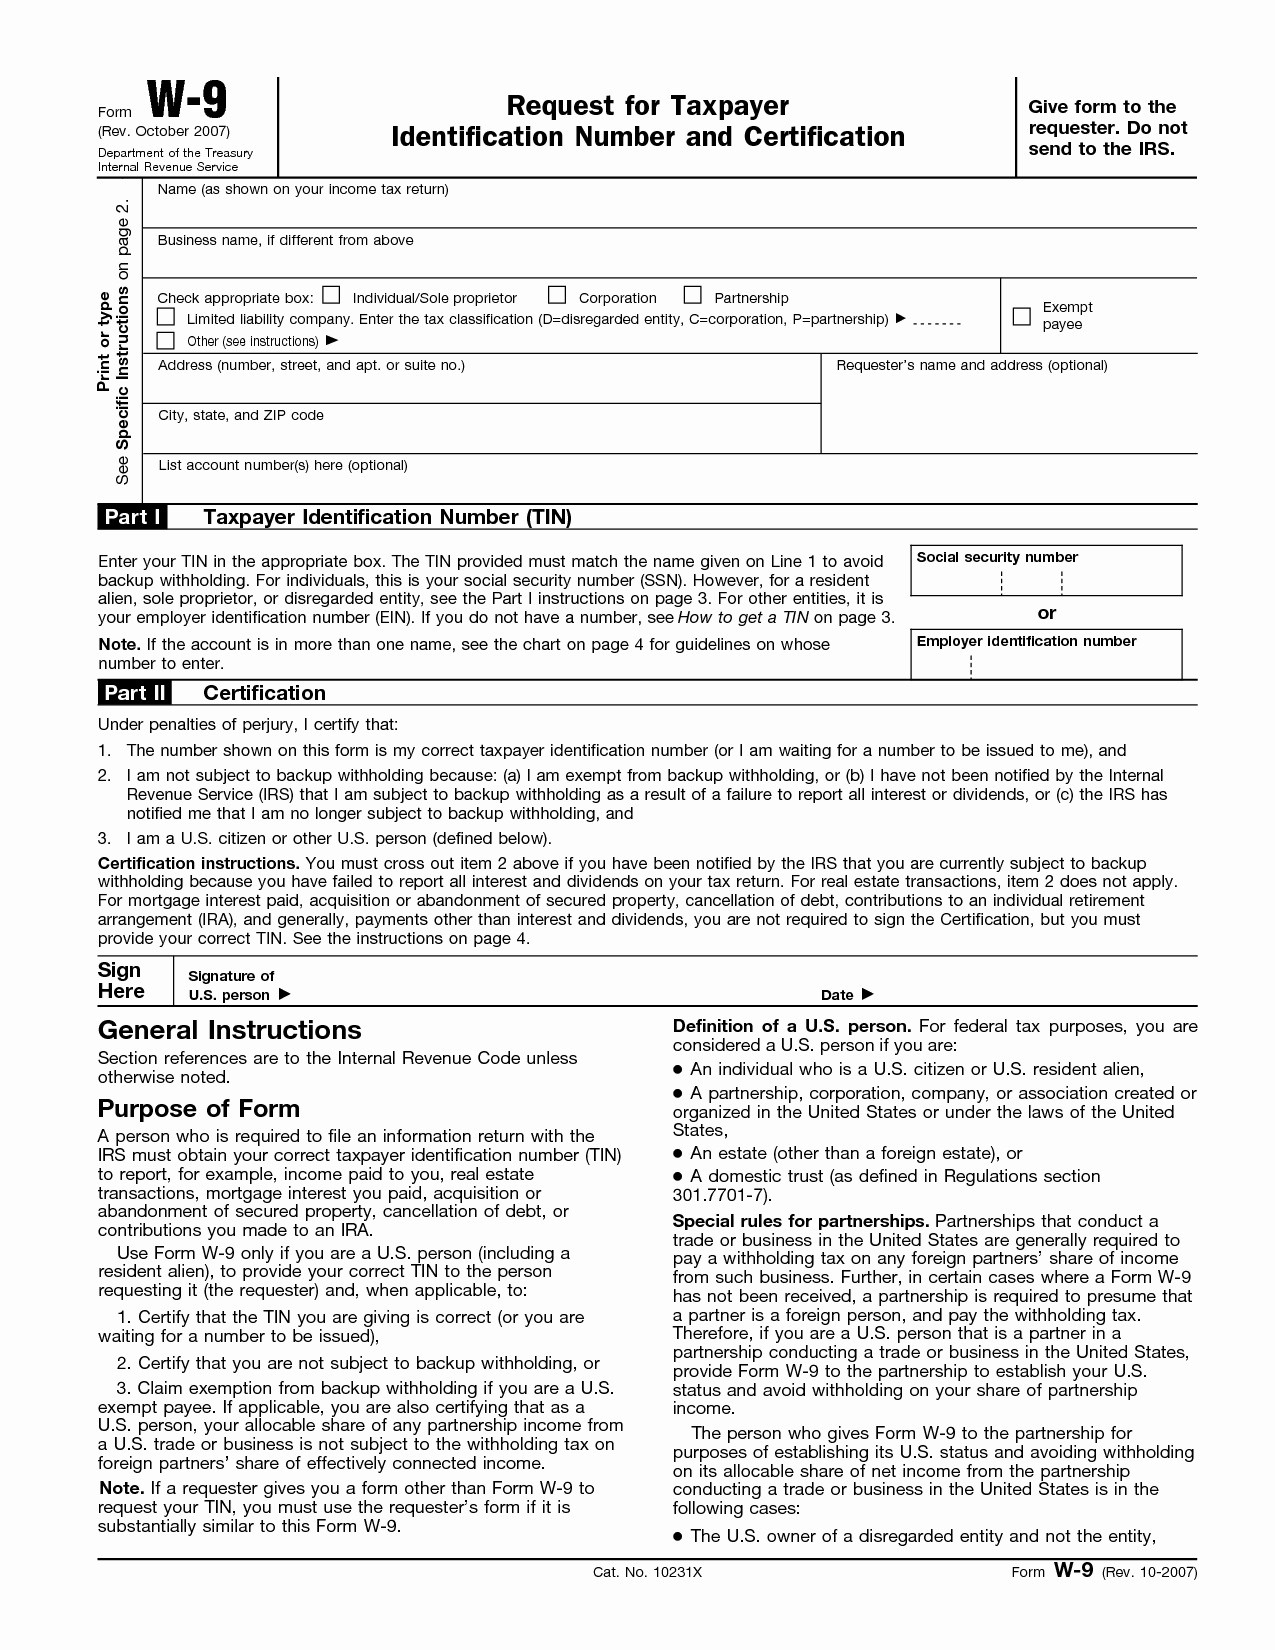 Form W 9 Wikipedia W9 Free Printable Form 2016 Free Printable